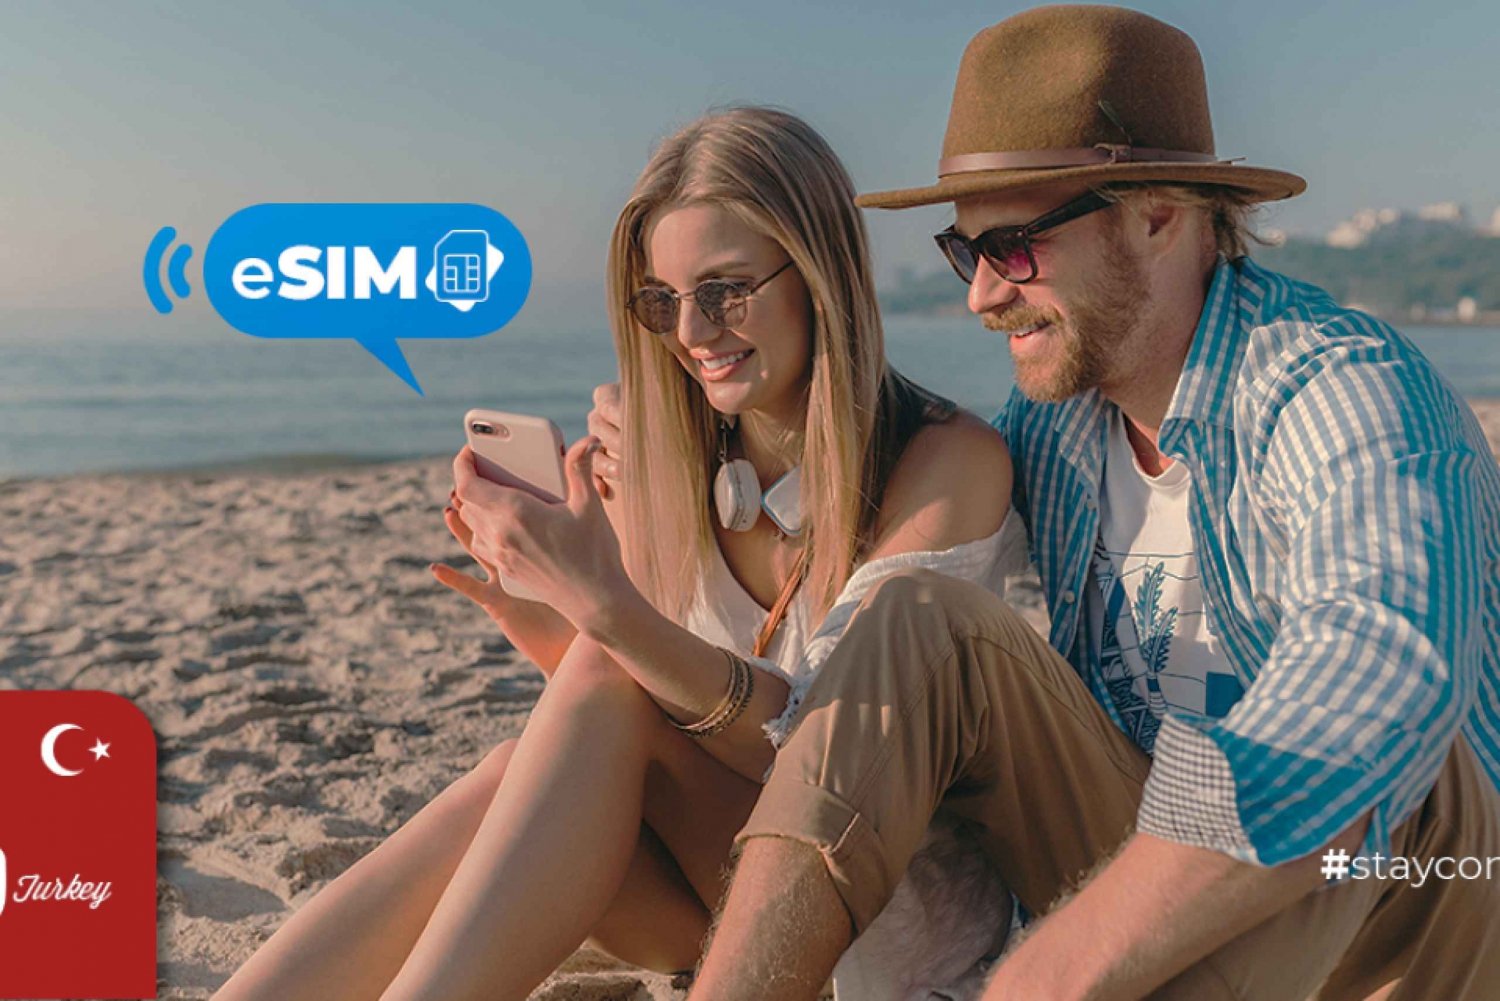 İzmir / Turkey: Roaming Internet with eSIM Mobile Data